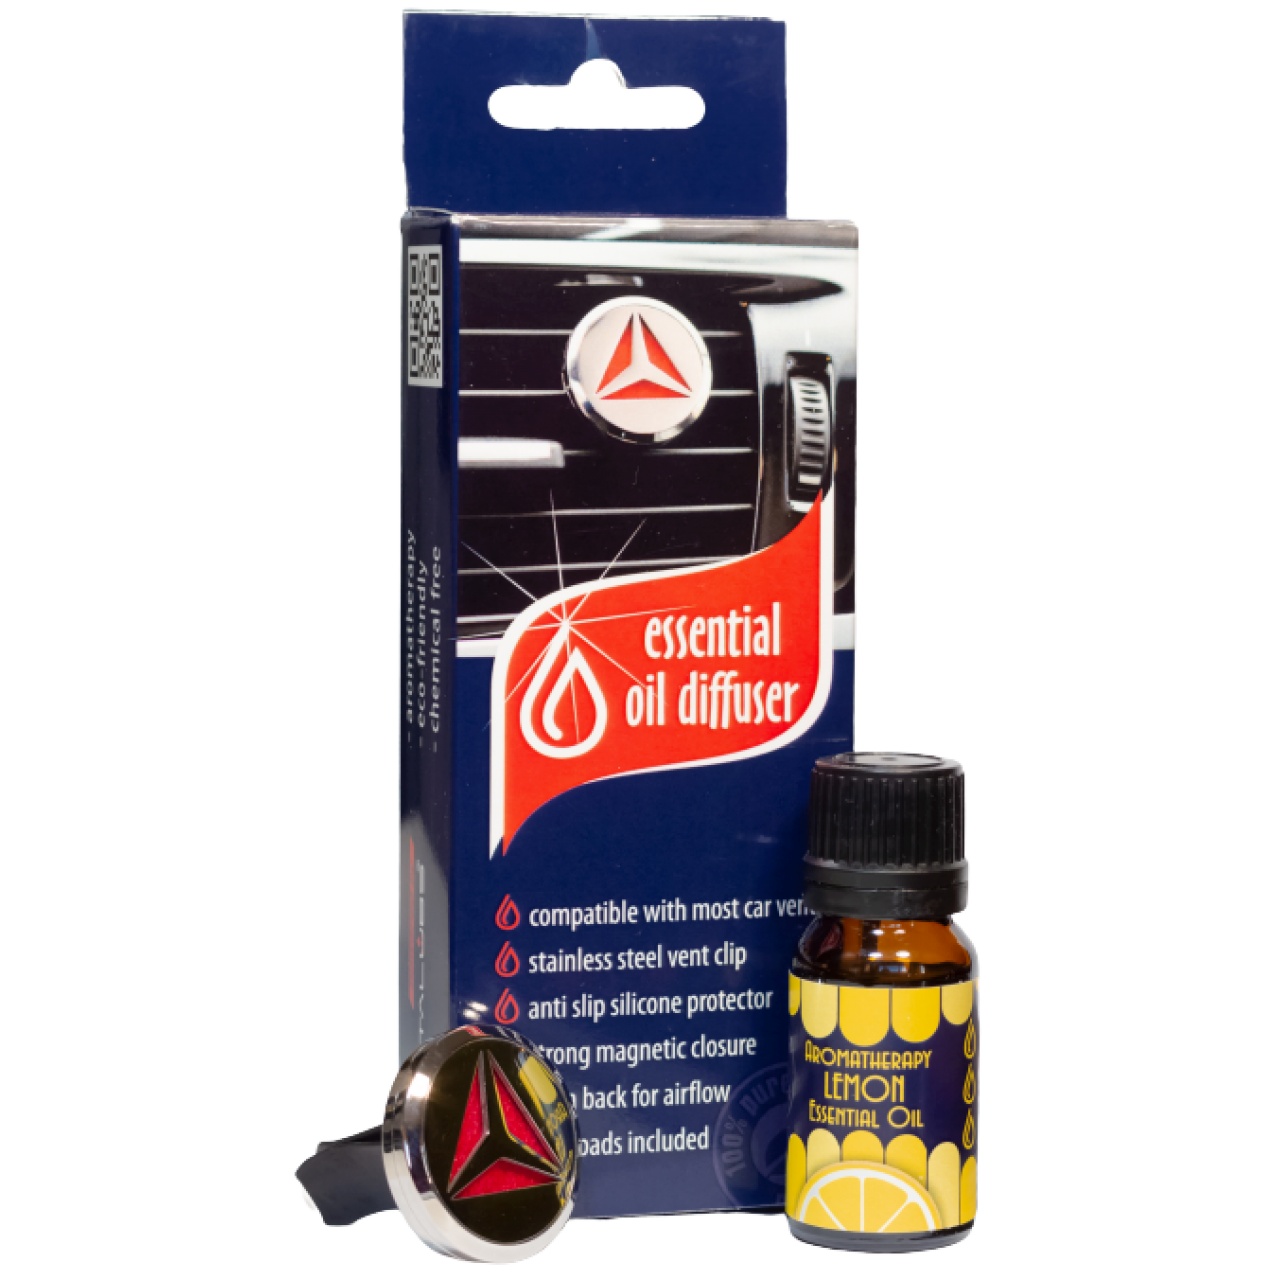 Essential oil diffuser (kit)